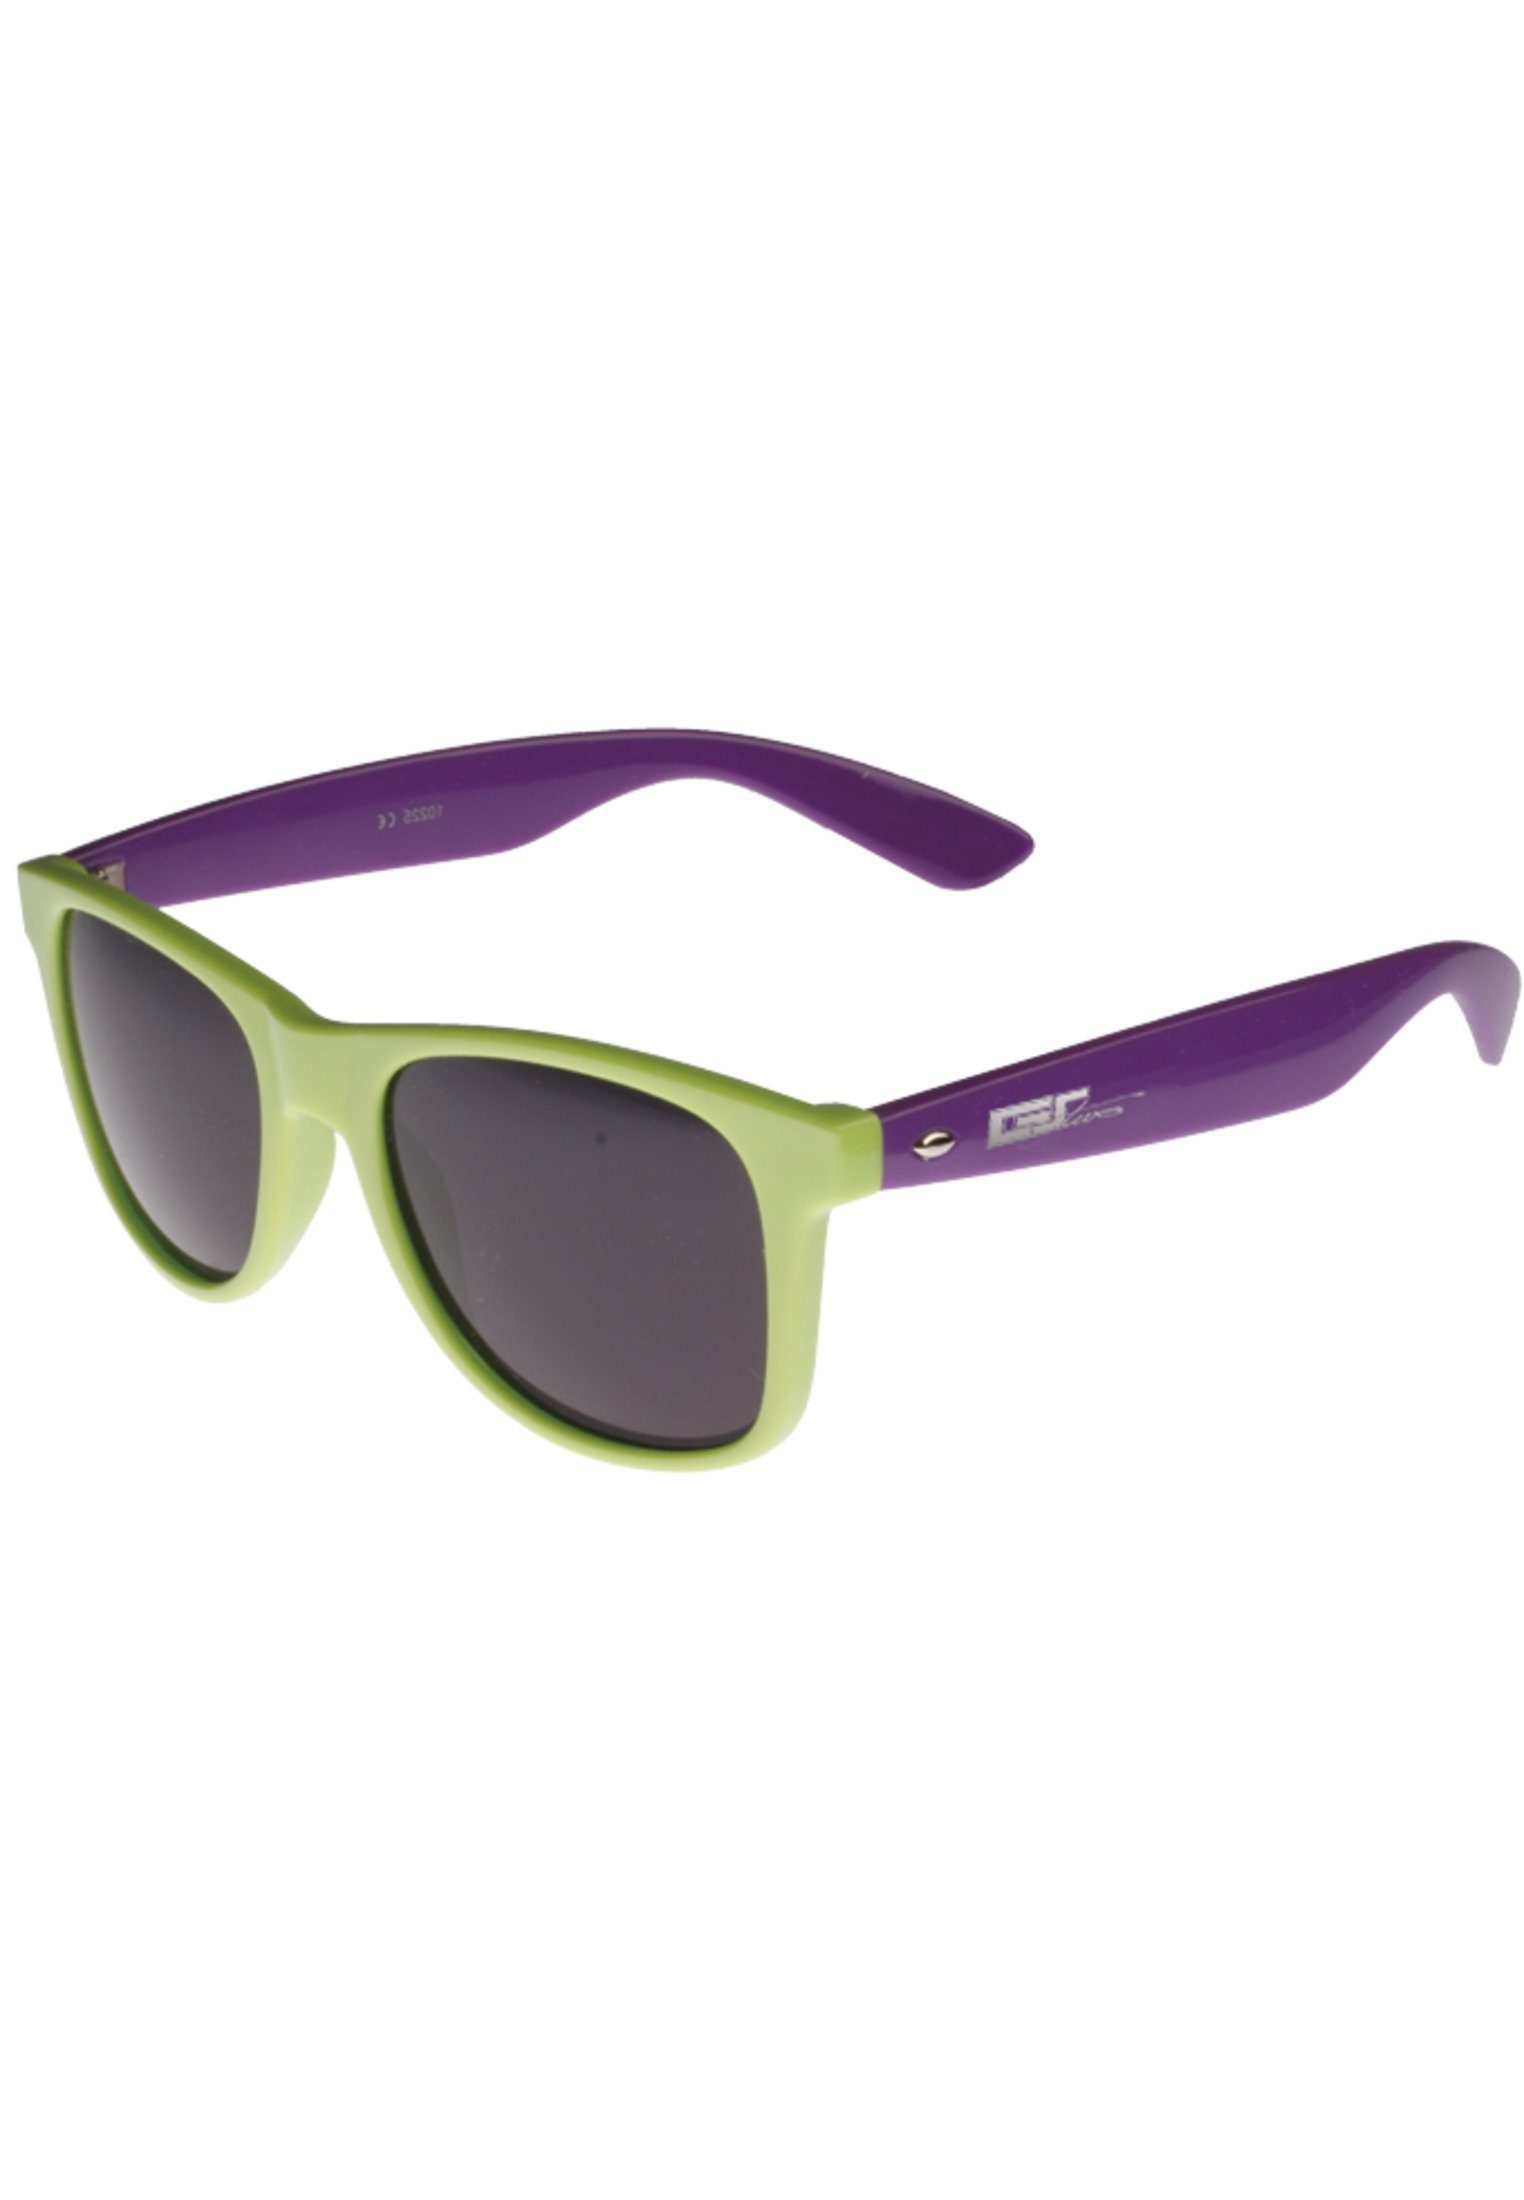 MSTRDS Sonnenbrille Accessoires Groove Shades GStwo limegreen/purple | Sonnenbrillen